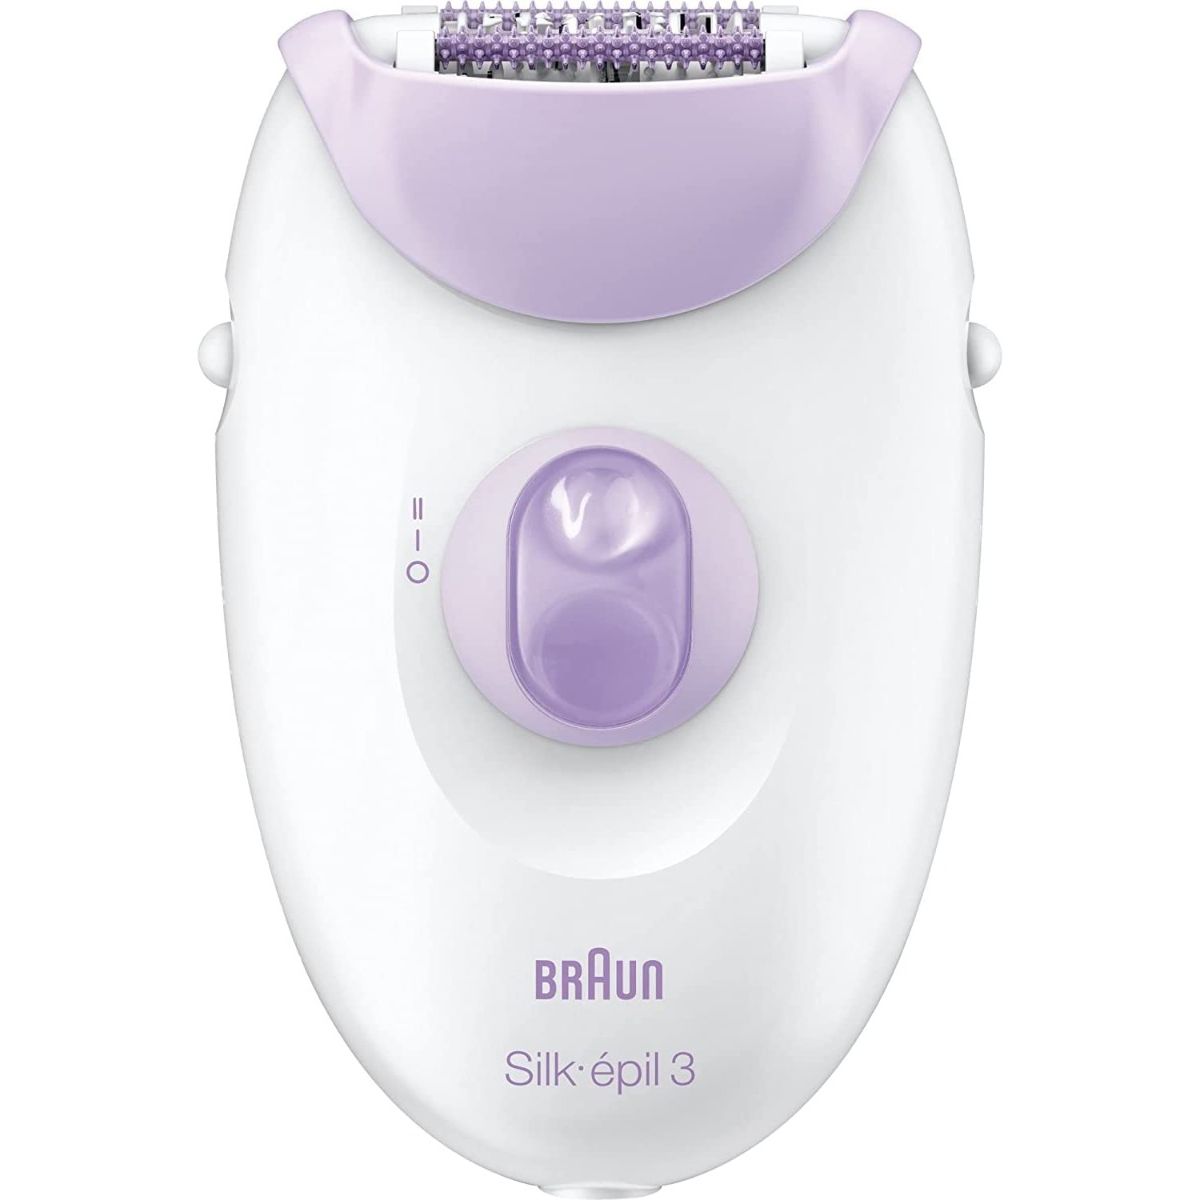 Braun Silk epil 3 Epilator for Women, White and Purple - 3170, Best price  in Egypt